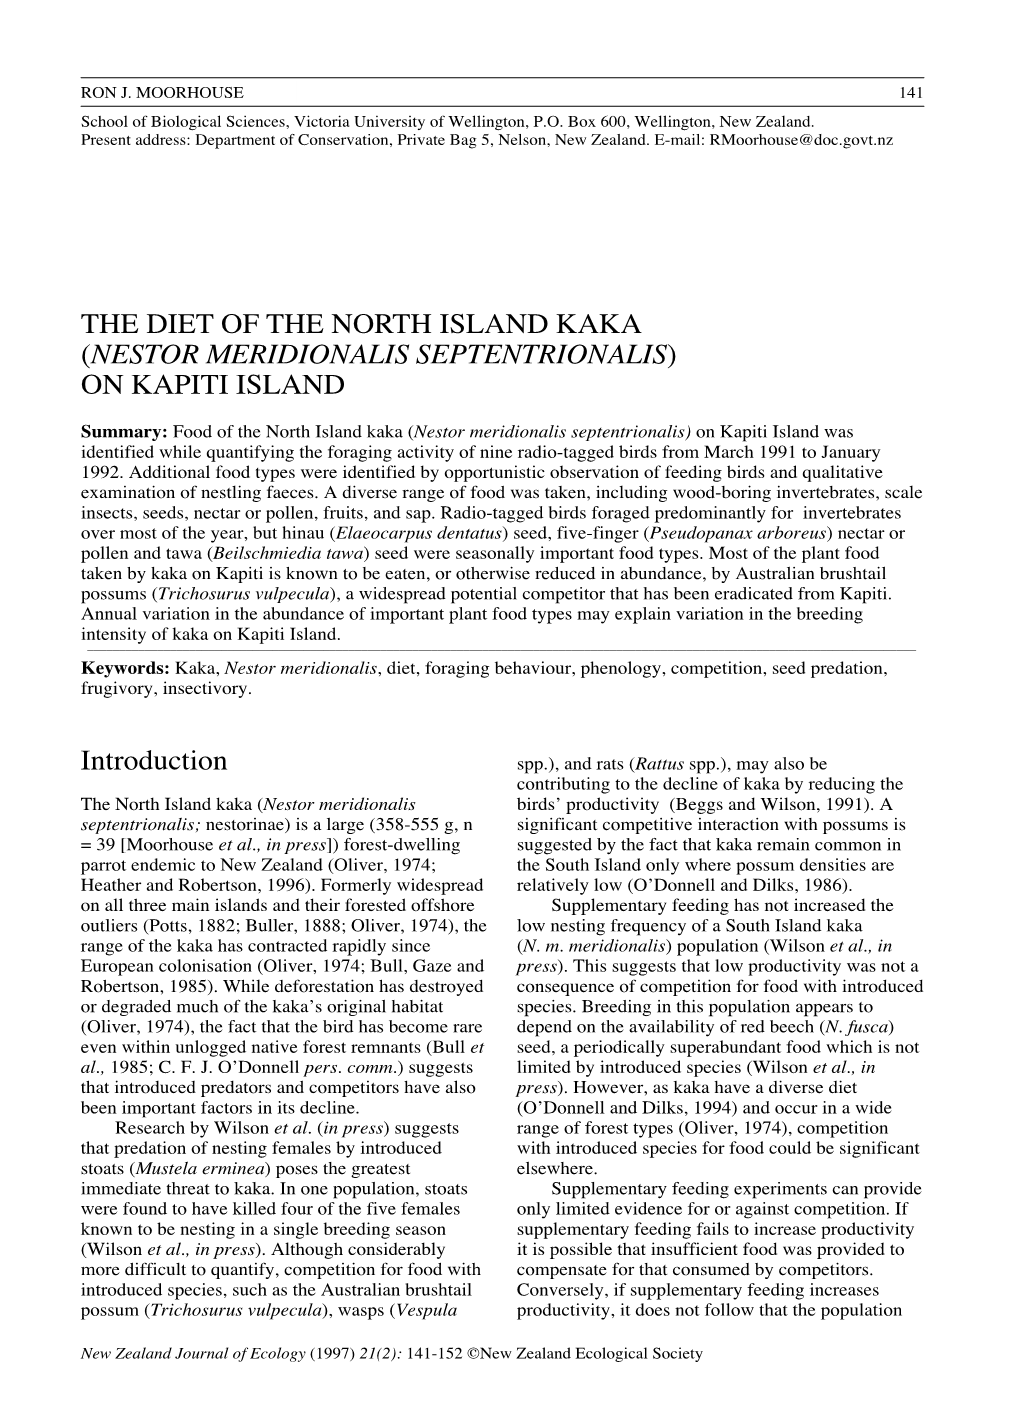 Diet of the North Island Kaka (Nestor Meridionalis Septentrionalis) on Kapiti Island